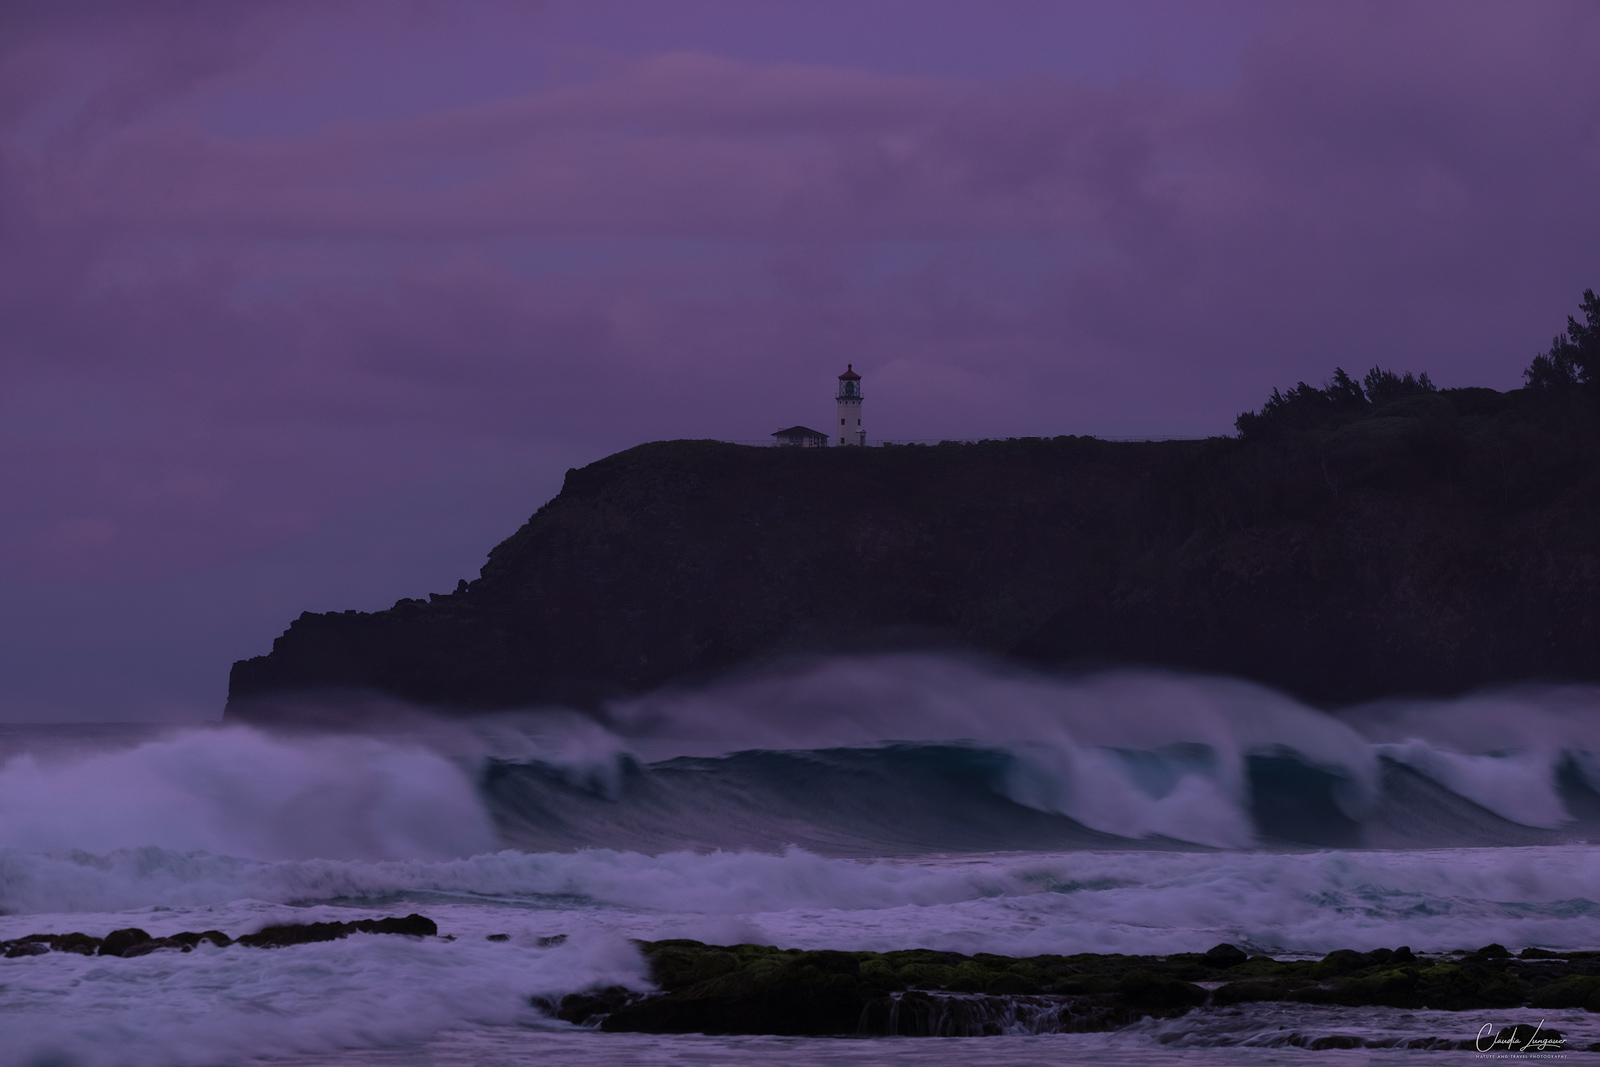 Big waves at Secret Beach, Kauai in Hawaii with Kilaulea lighthouse in the background.